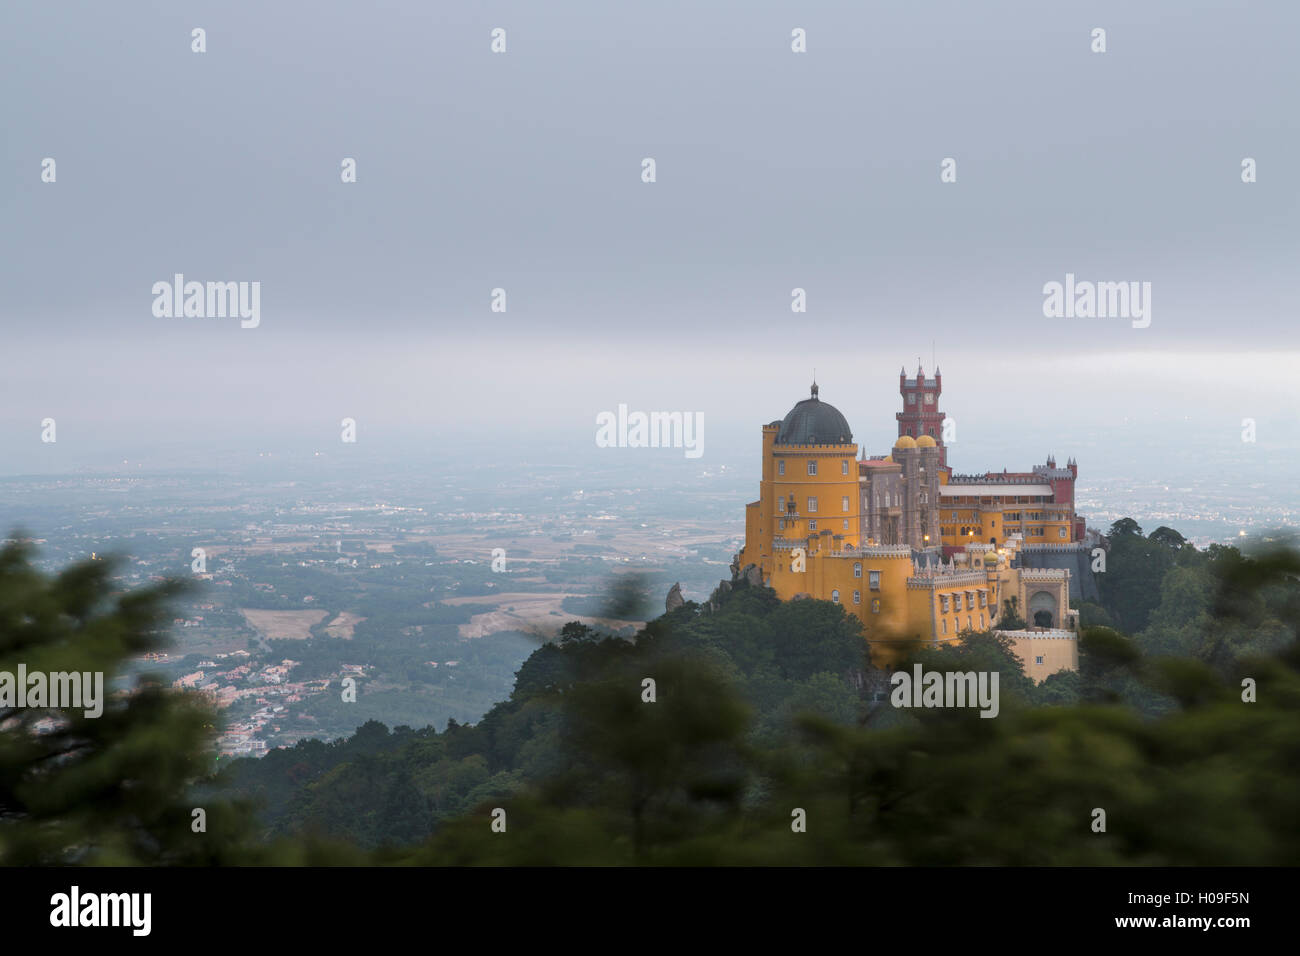 https://c8.alamy.com/comp/H09F5N/the-colorful-castle-of-palacio-da-pena-unesco-on-top-of-hill-sao-pedro-H09F5N.jpg